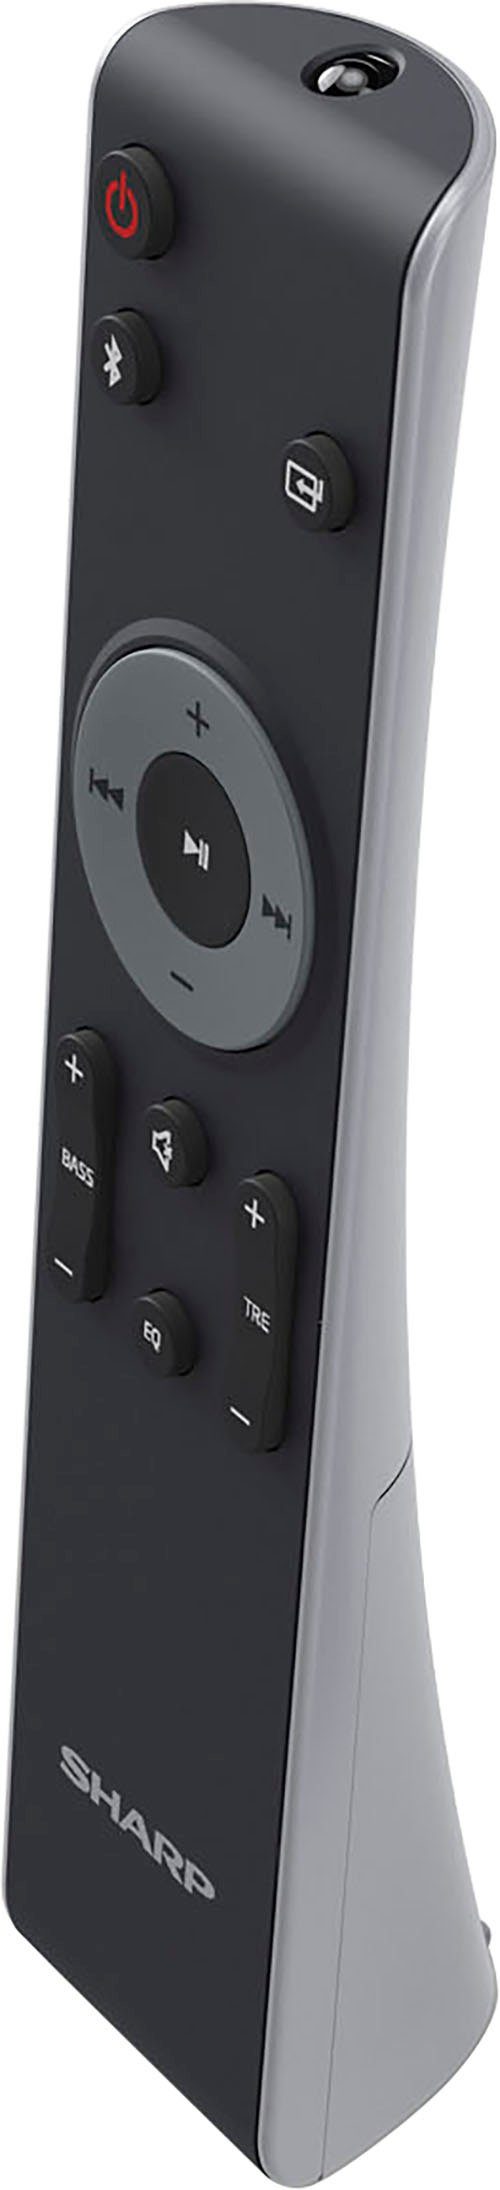 Sharp HT-SBW182 2.1 (Bluetooth, W) 160 Soundbar